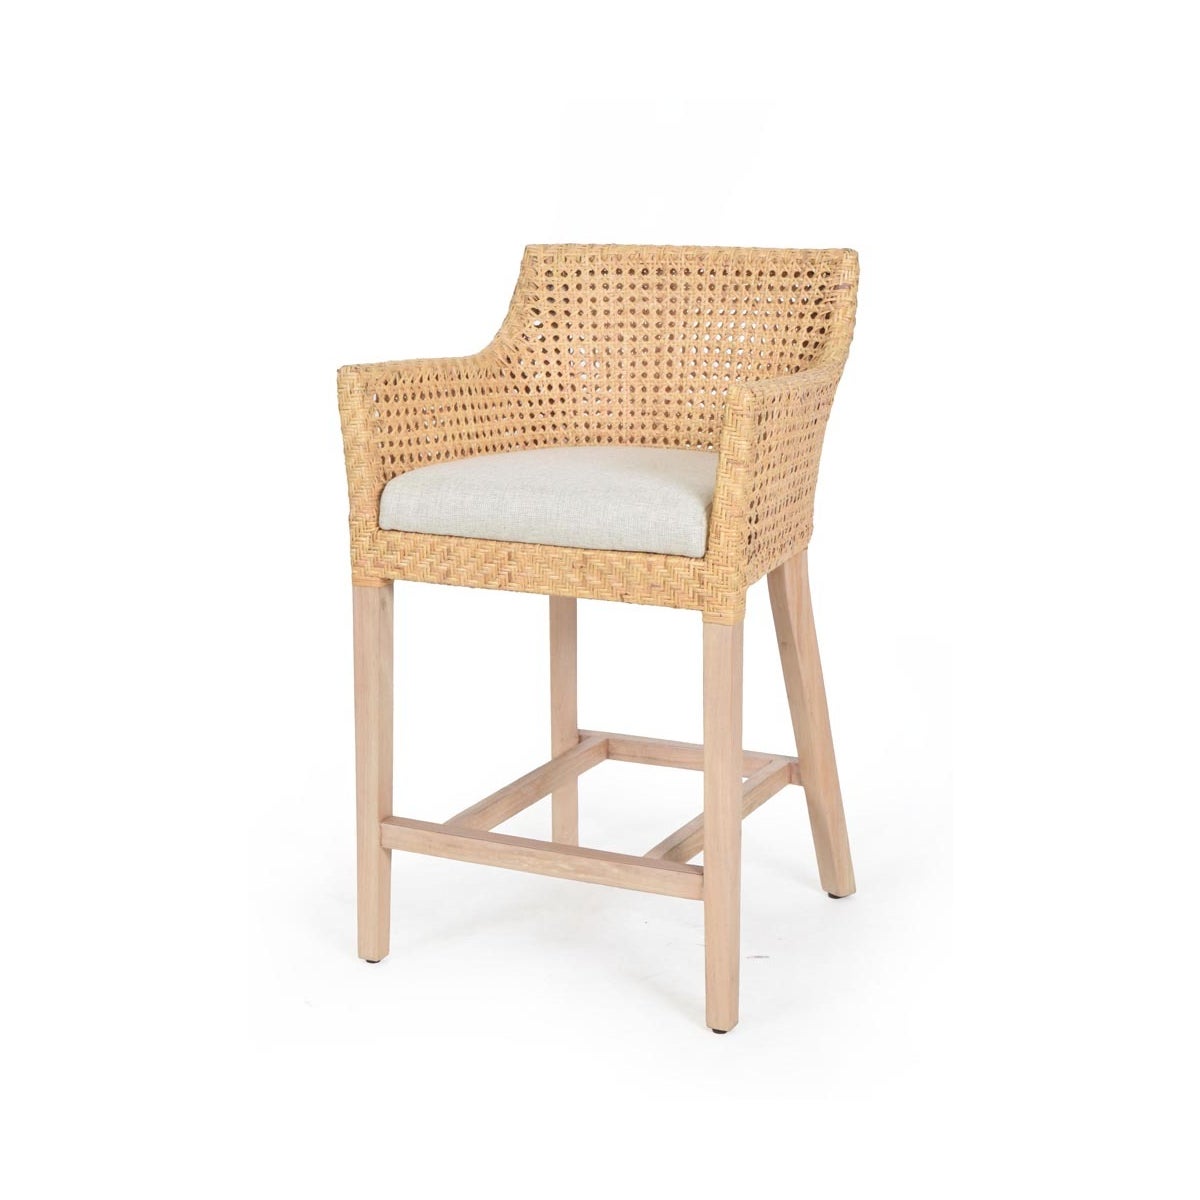 Blora Counter Chair Mahogany Frame Color - Natural Woven Rattan Color - Natural  Cushion Color -